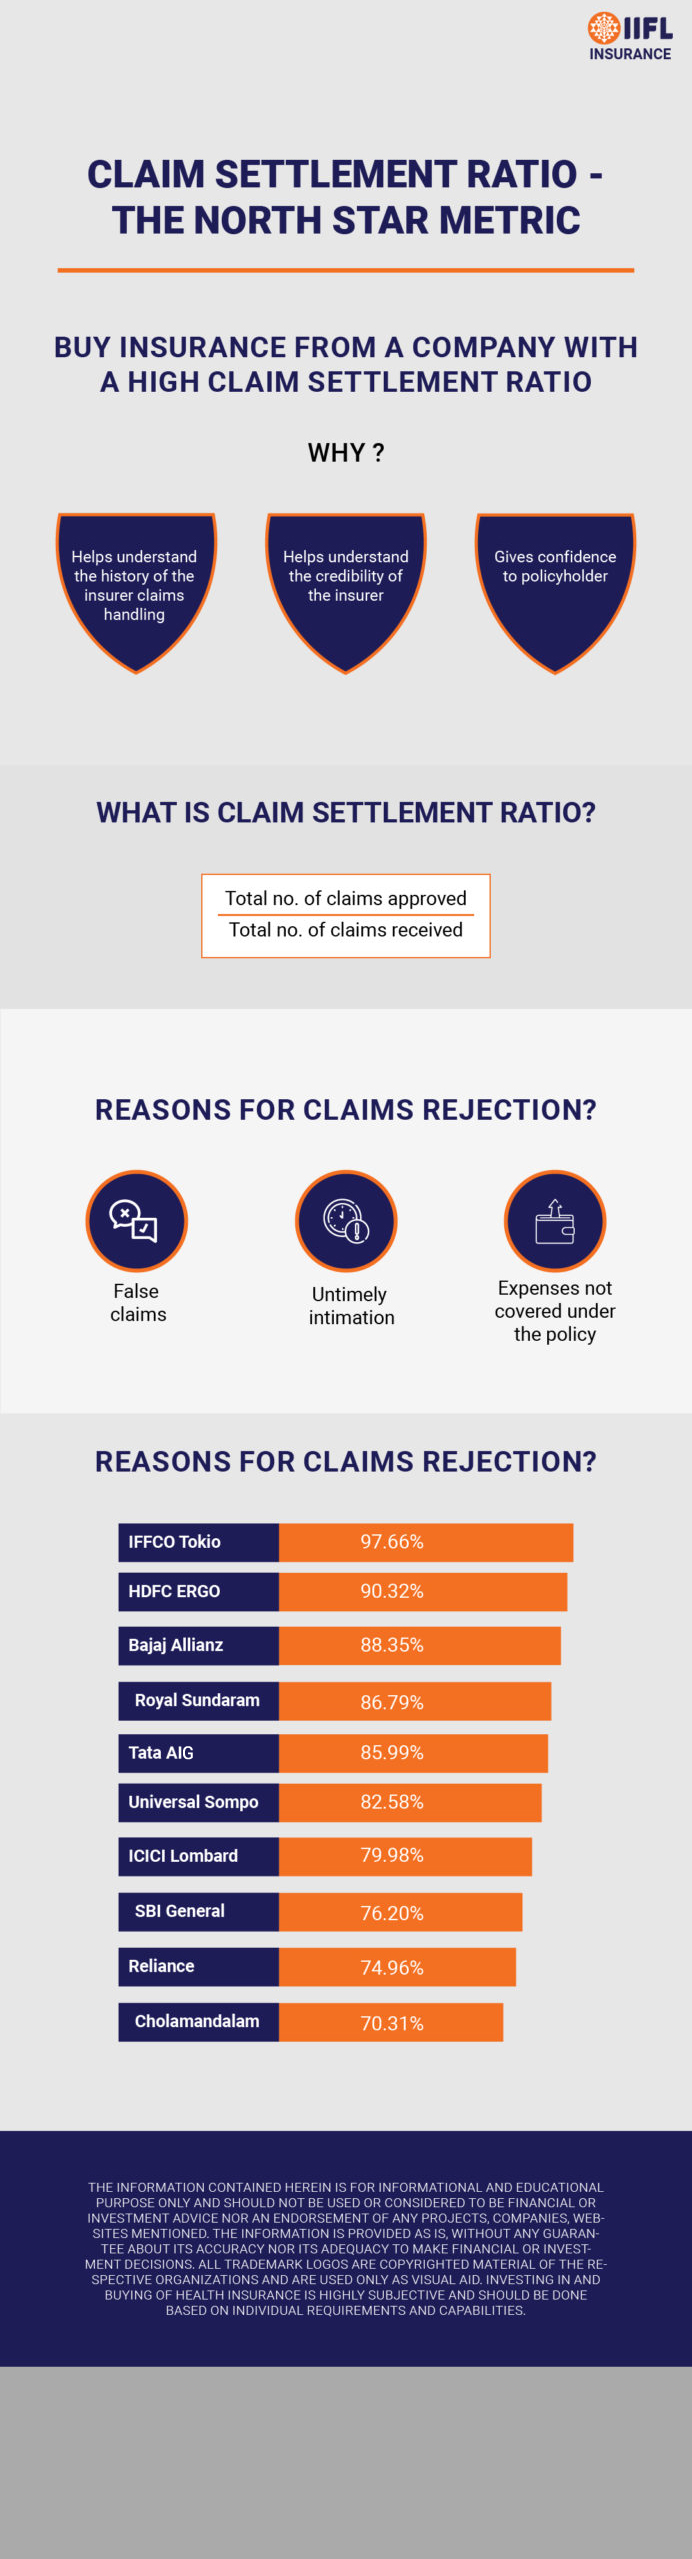 claim settlement ratio infographic